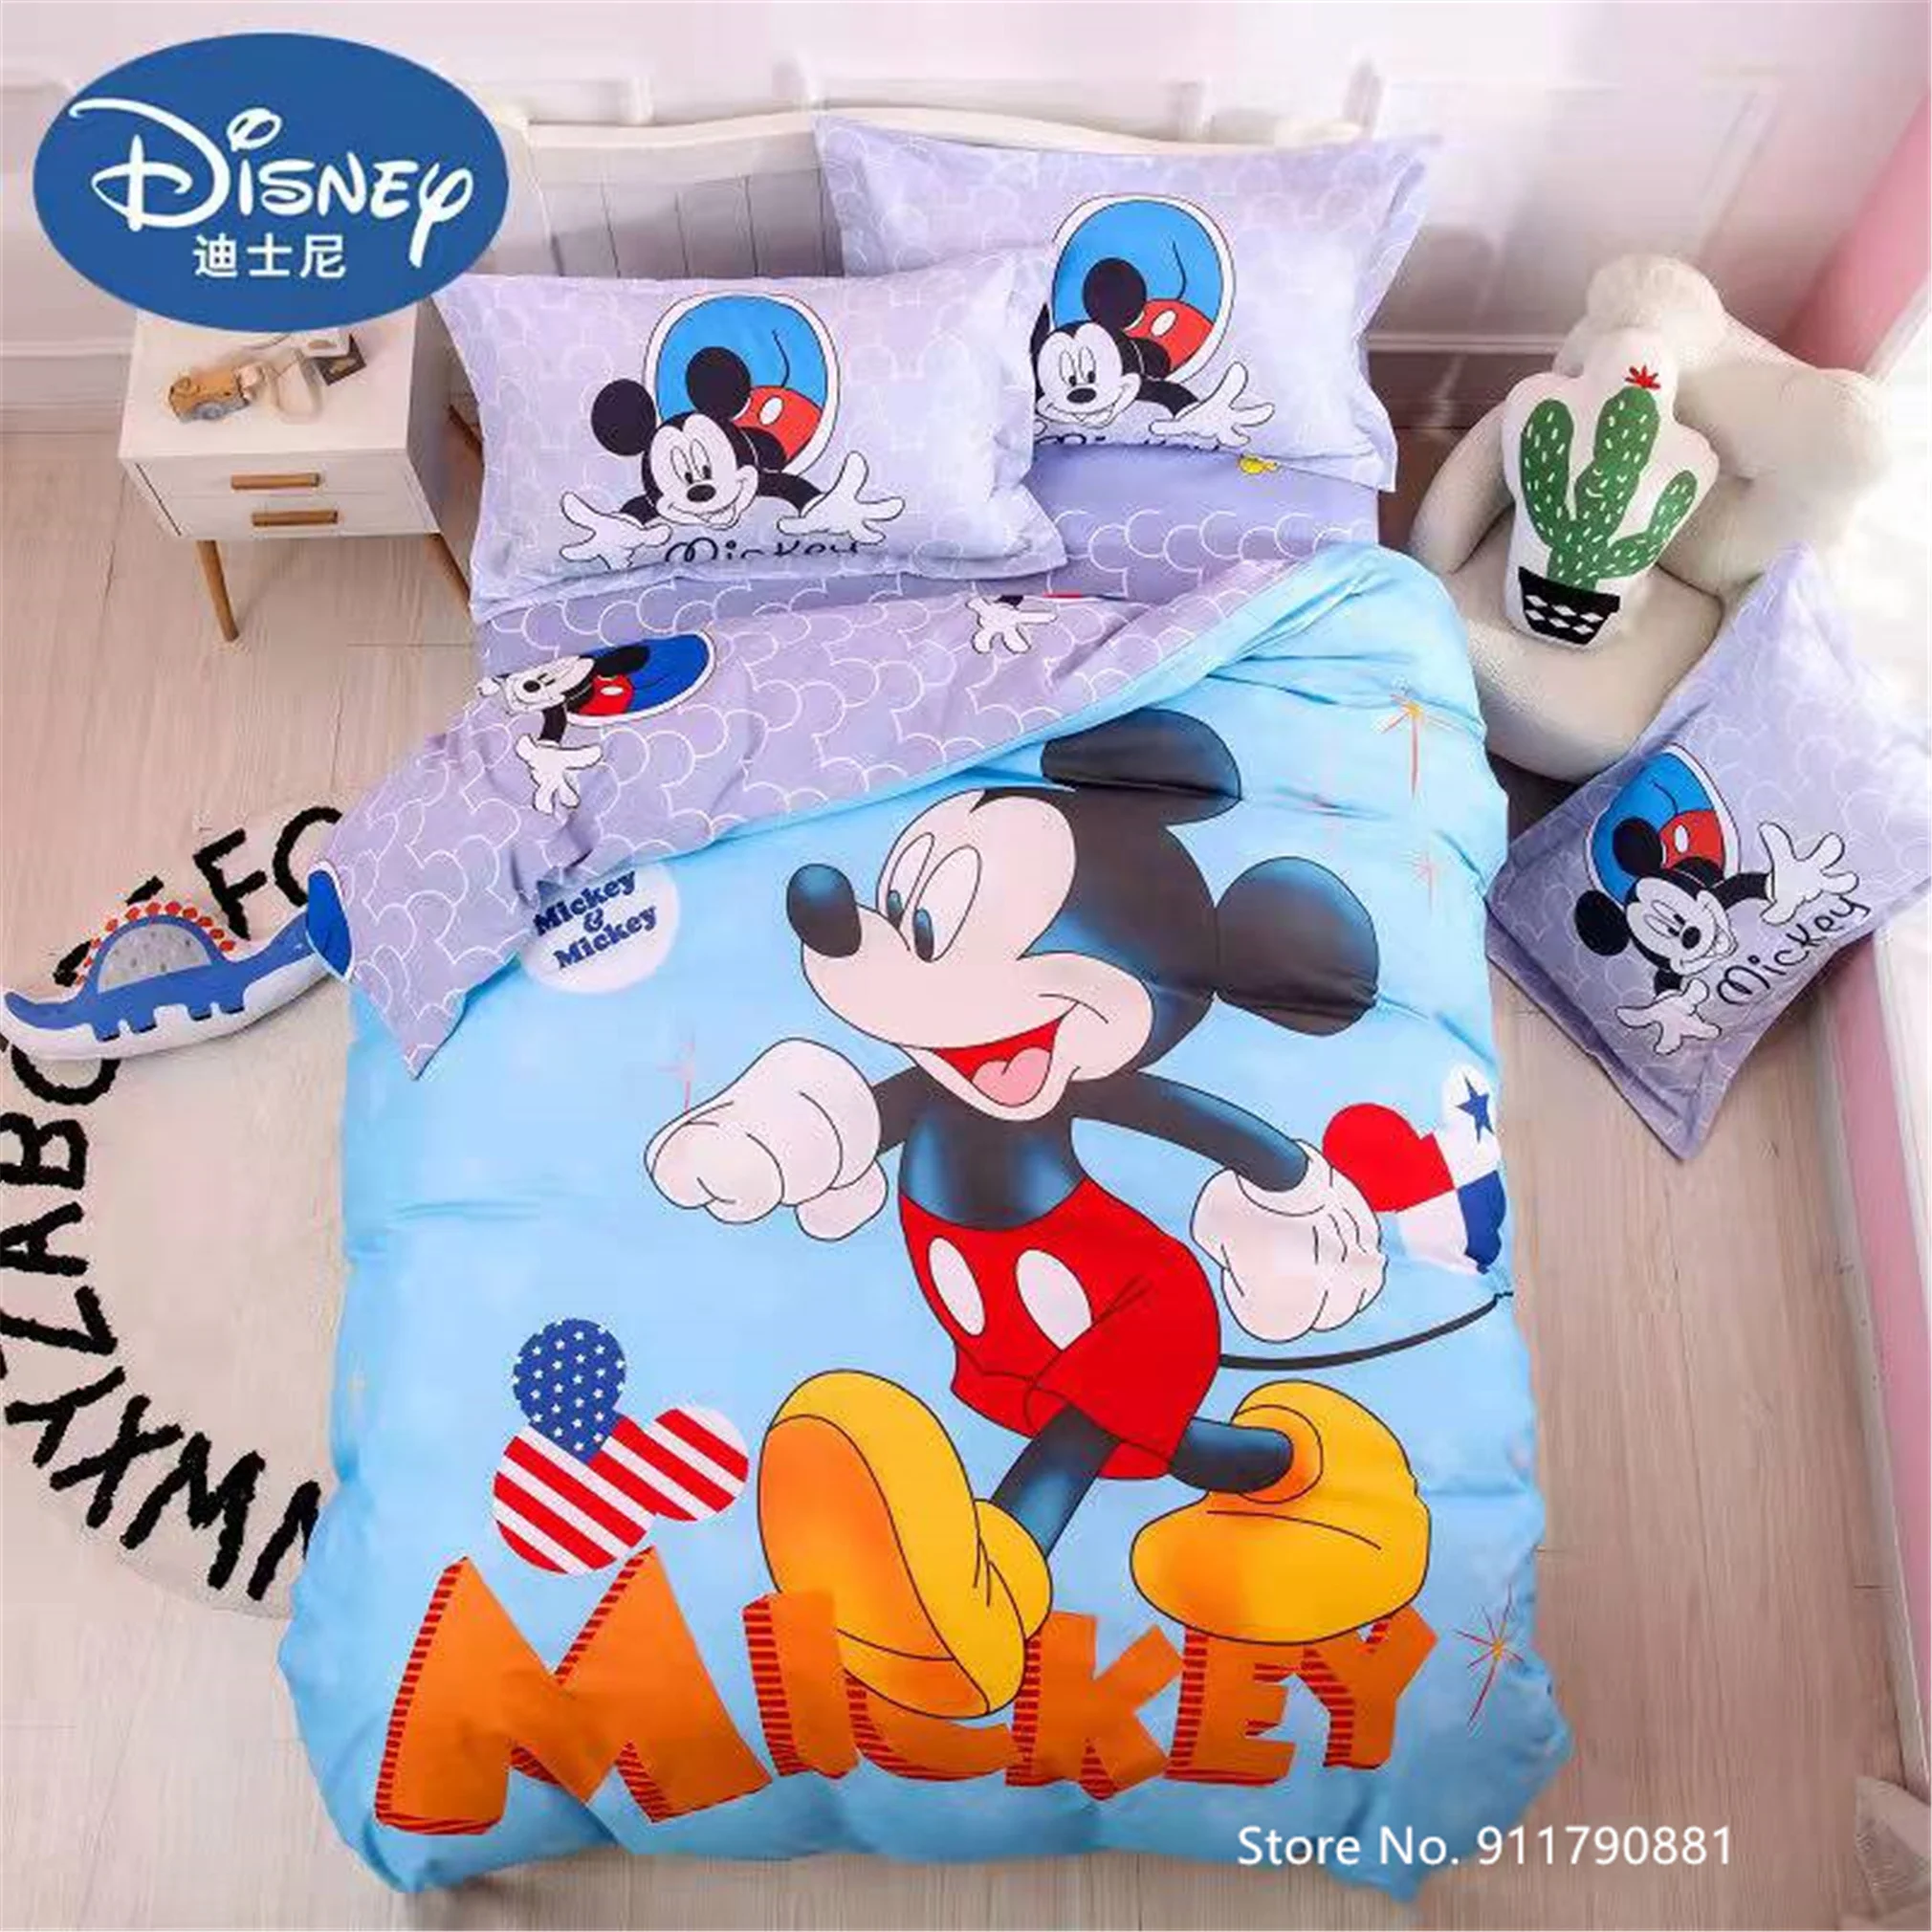 Disney Minnie Daisy Cute Print 3D Bedding Set Adult Girls Bedroom Decorative Duvet Quilt Cover Pillowcase Linens Home Textile